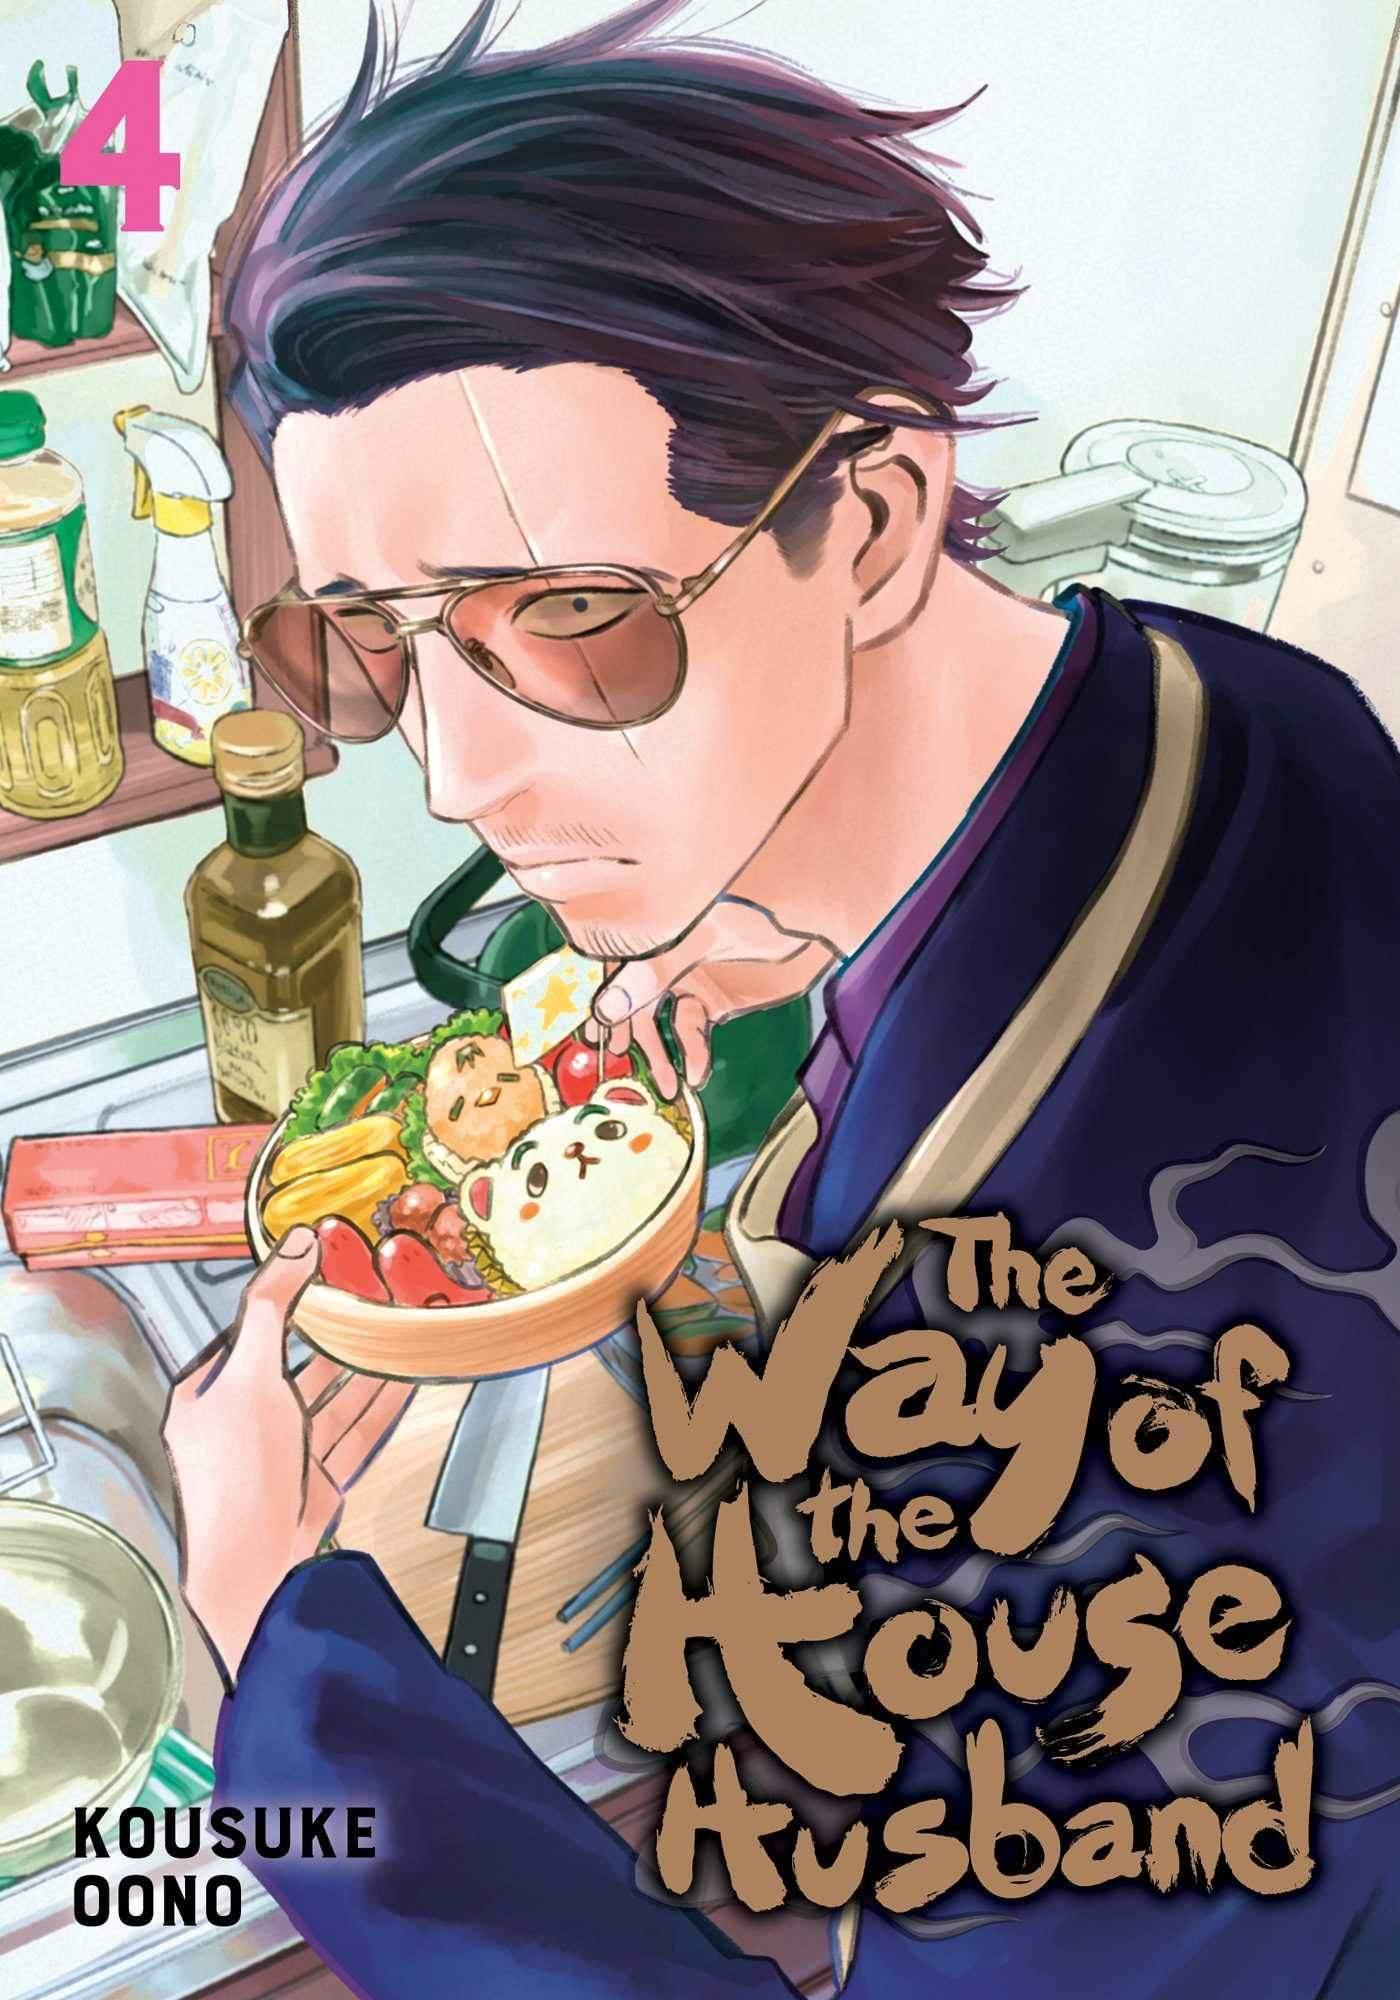 The Way of the Househusband (Manga) Vol. 4 - Tankobonbon